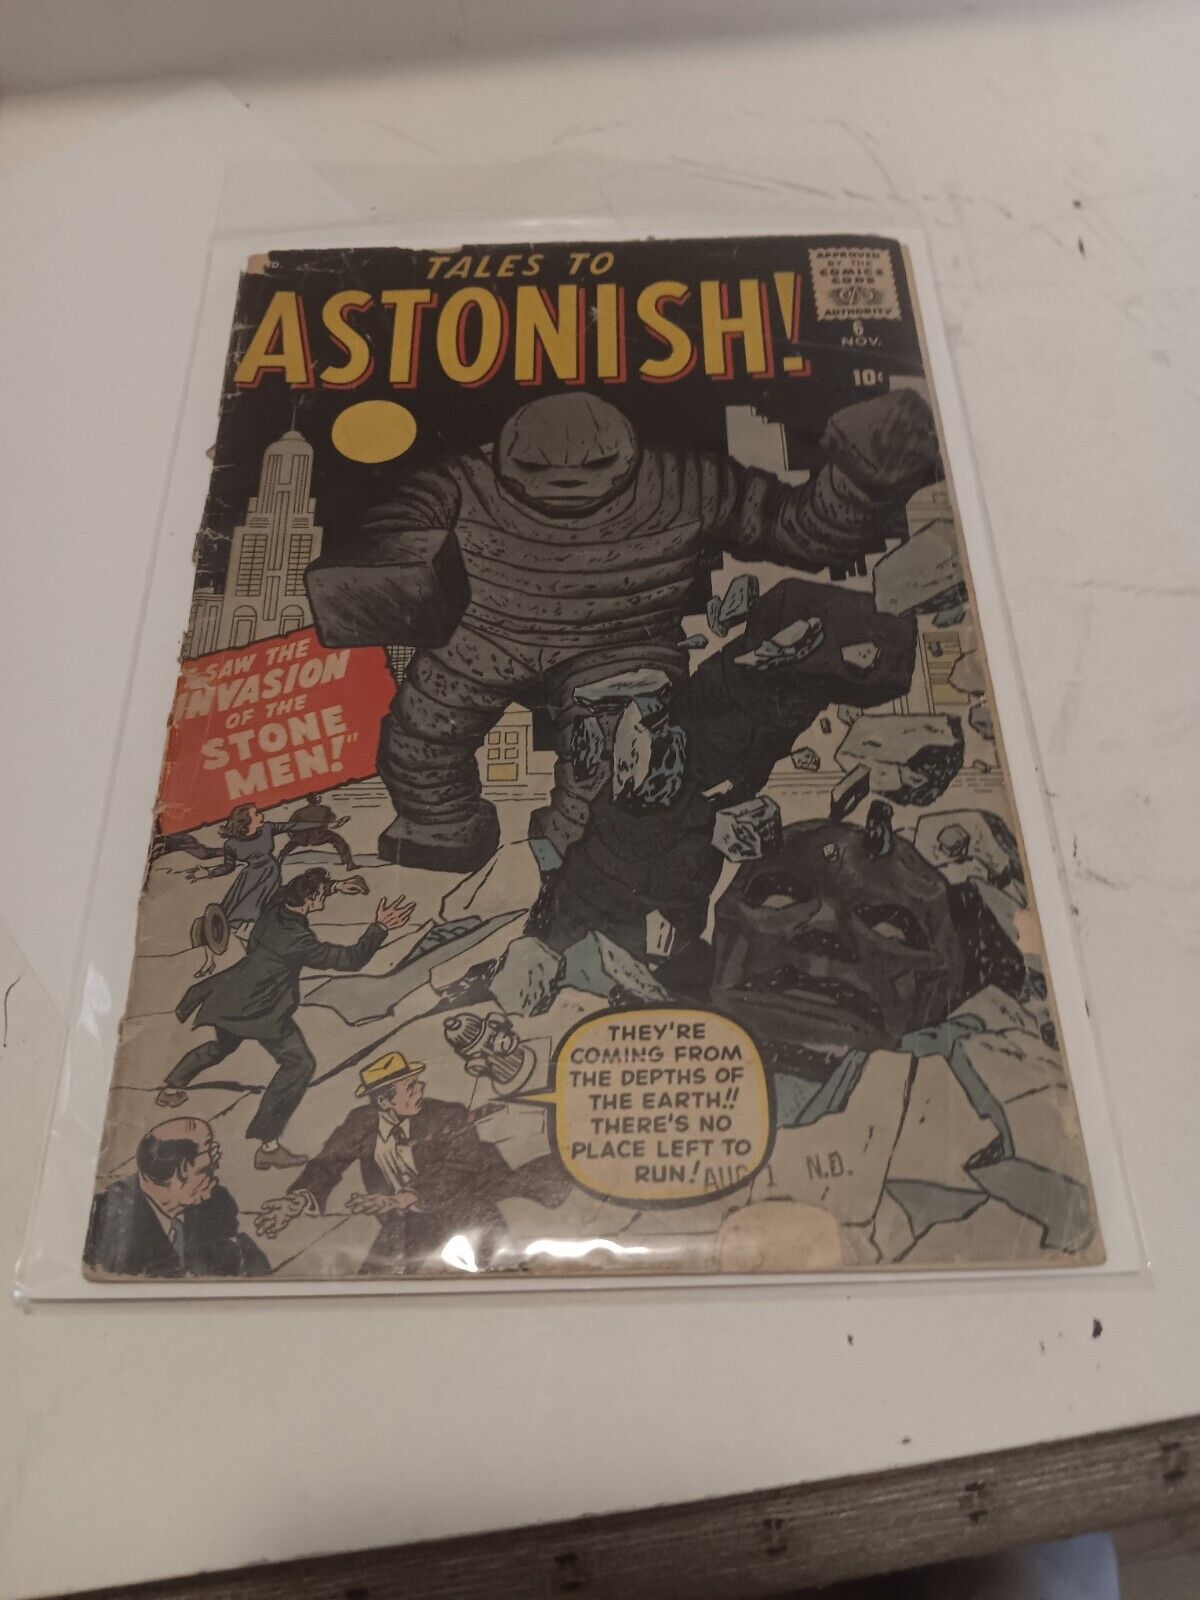 TALES TO ASTONISH #6 - Low-Mid Grade ATLAS 1959 - KIRBY/LEE/DITKO